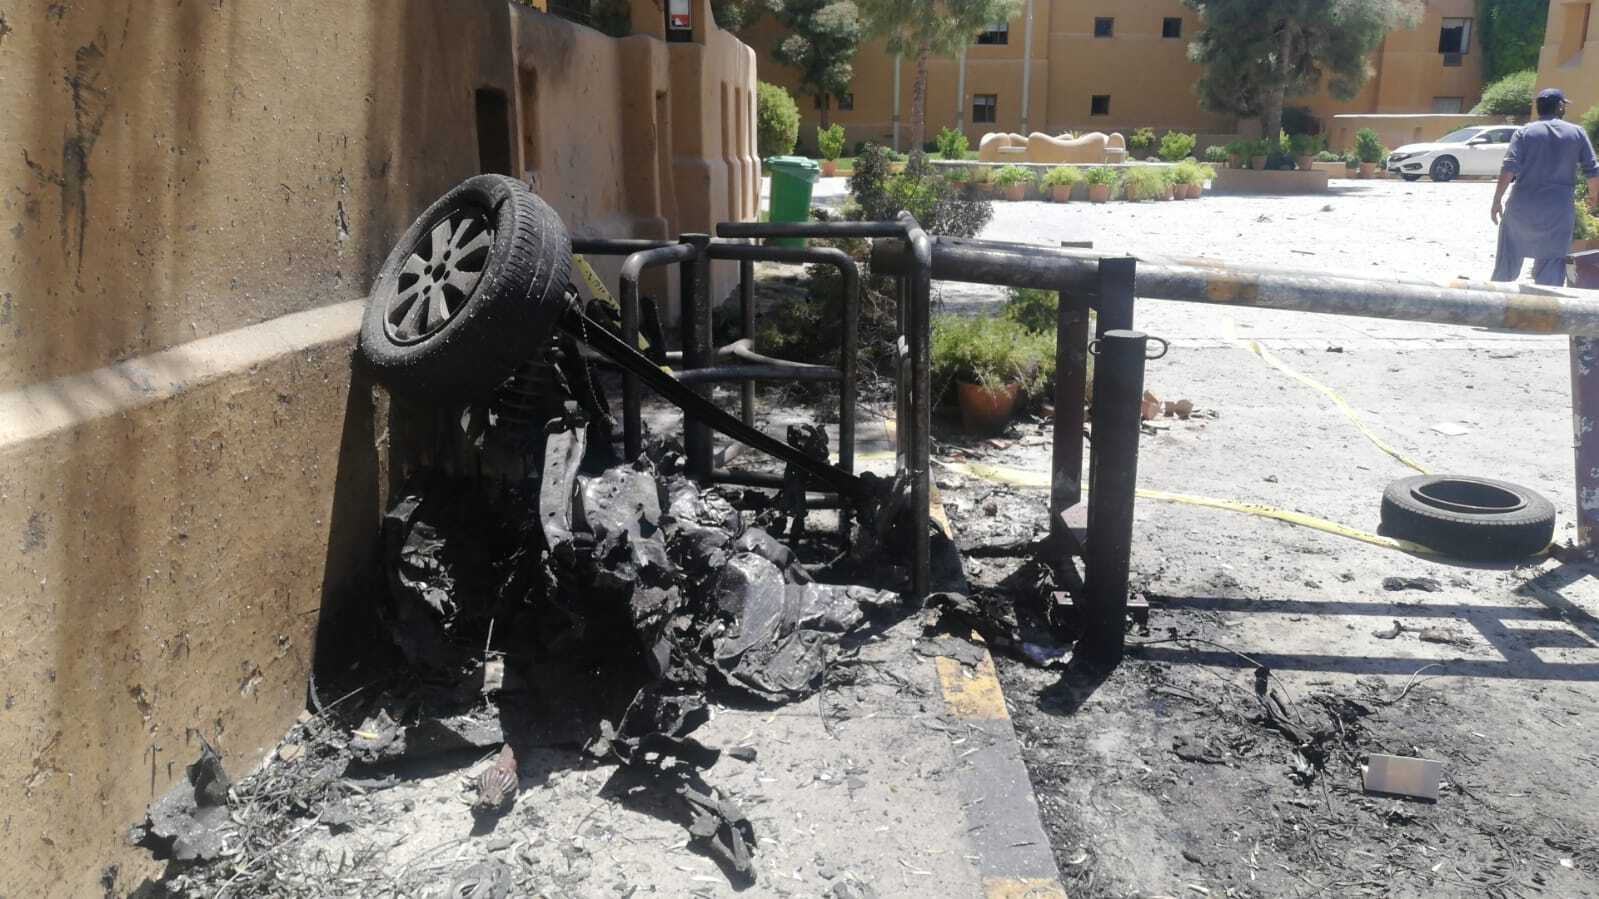 Blast in parking lot of luxury hotel in Quetta, Pakistan âââââââ